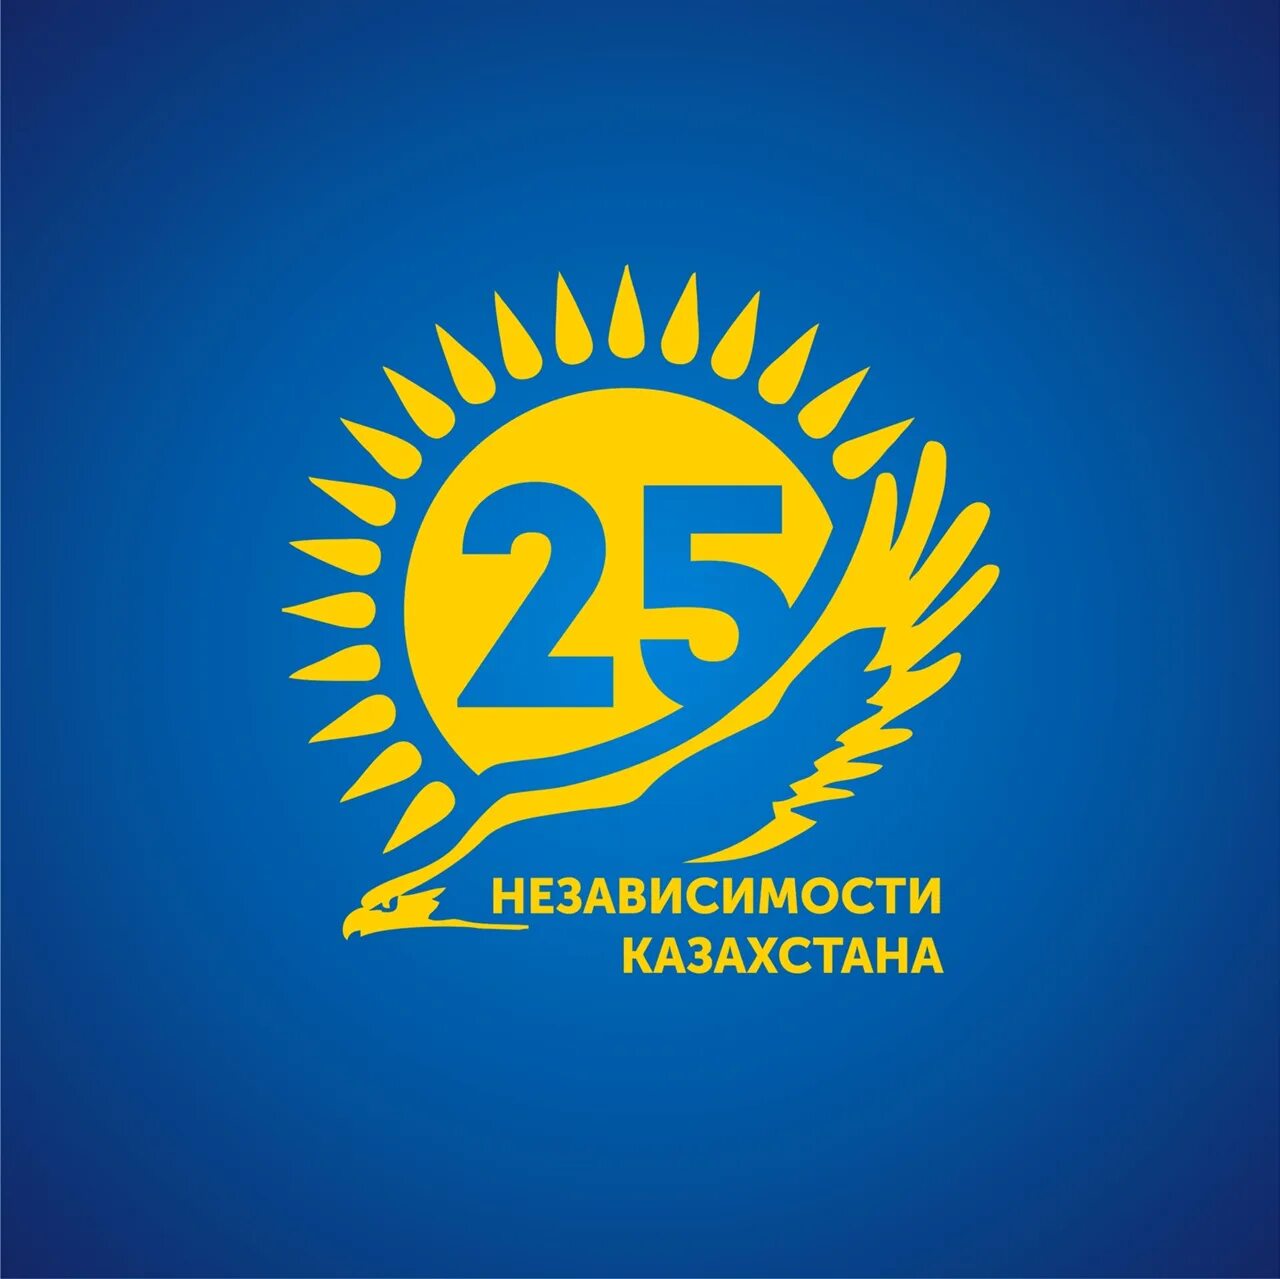 30 декабря казахстан. 30 Лет независимости Казахстана. Эмблема независимости. Эмблема независимости Казахстана. Независимость логотип.